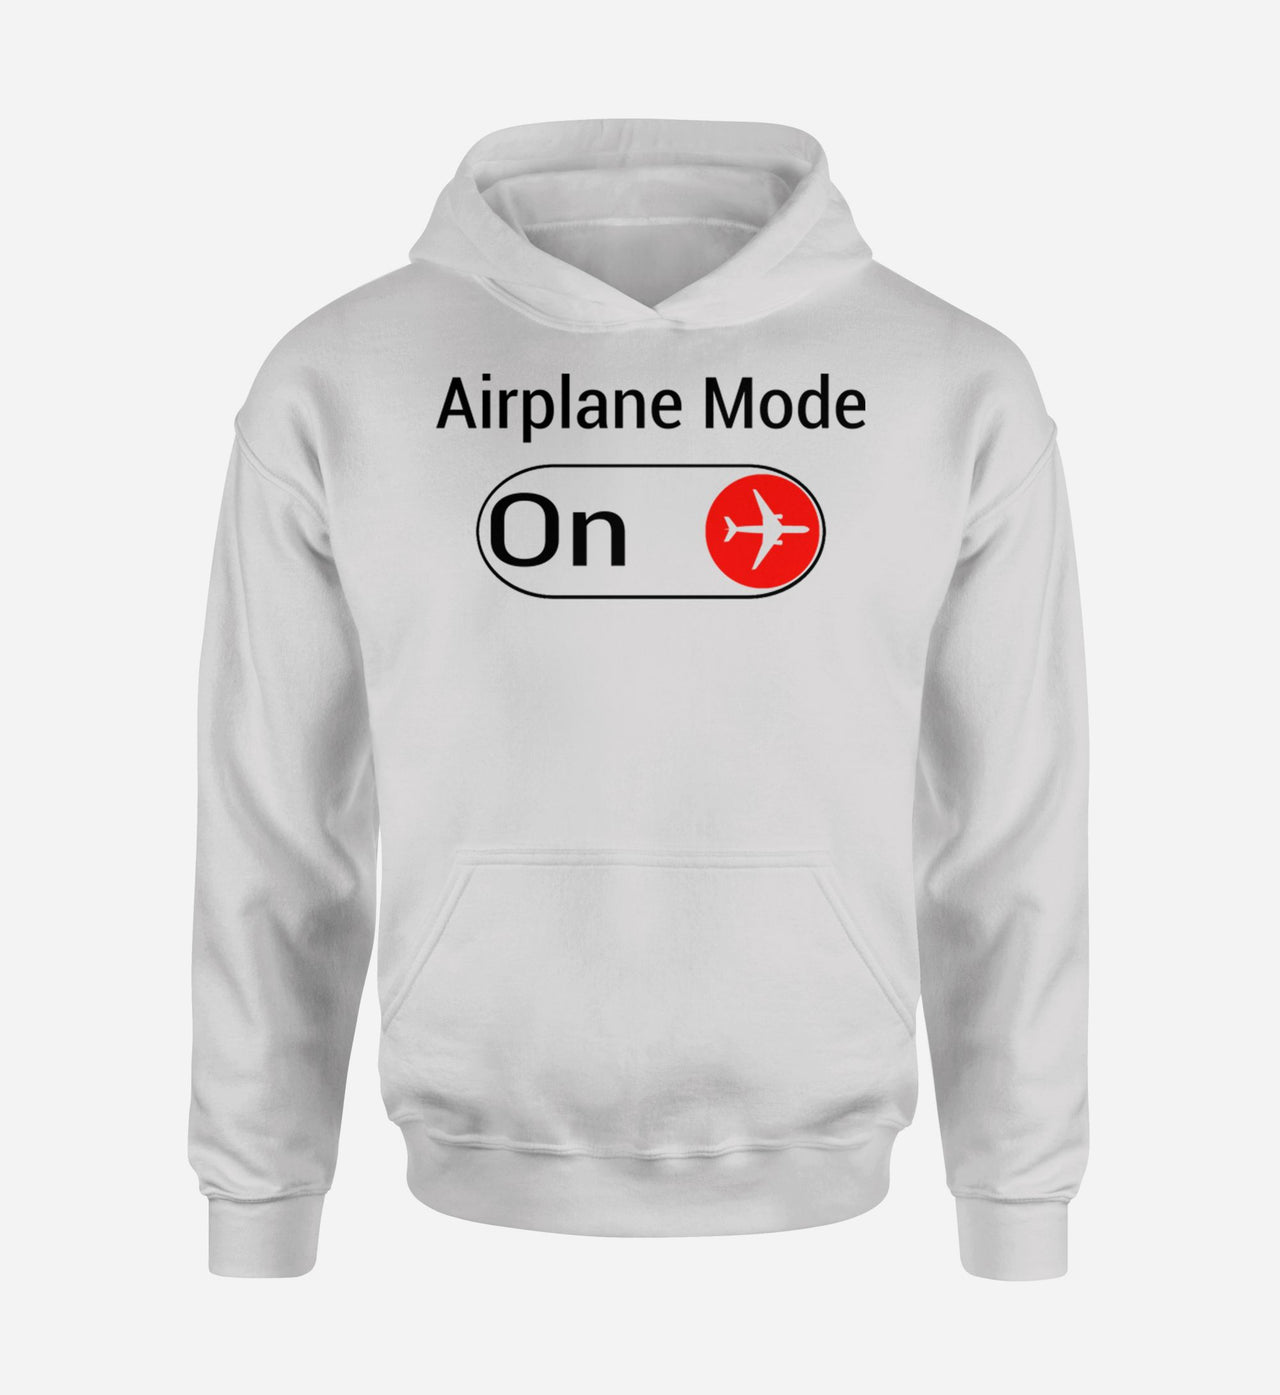 Airplane Mode On Designed Hoodies